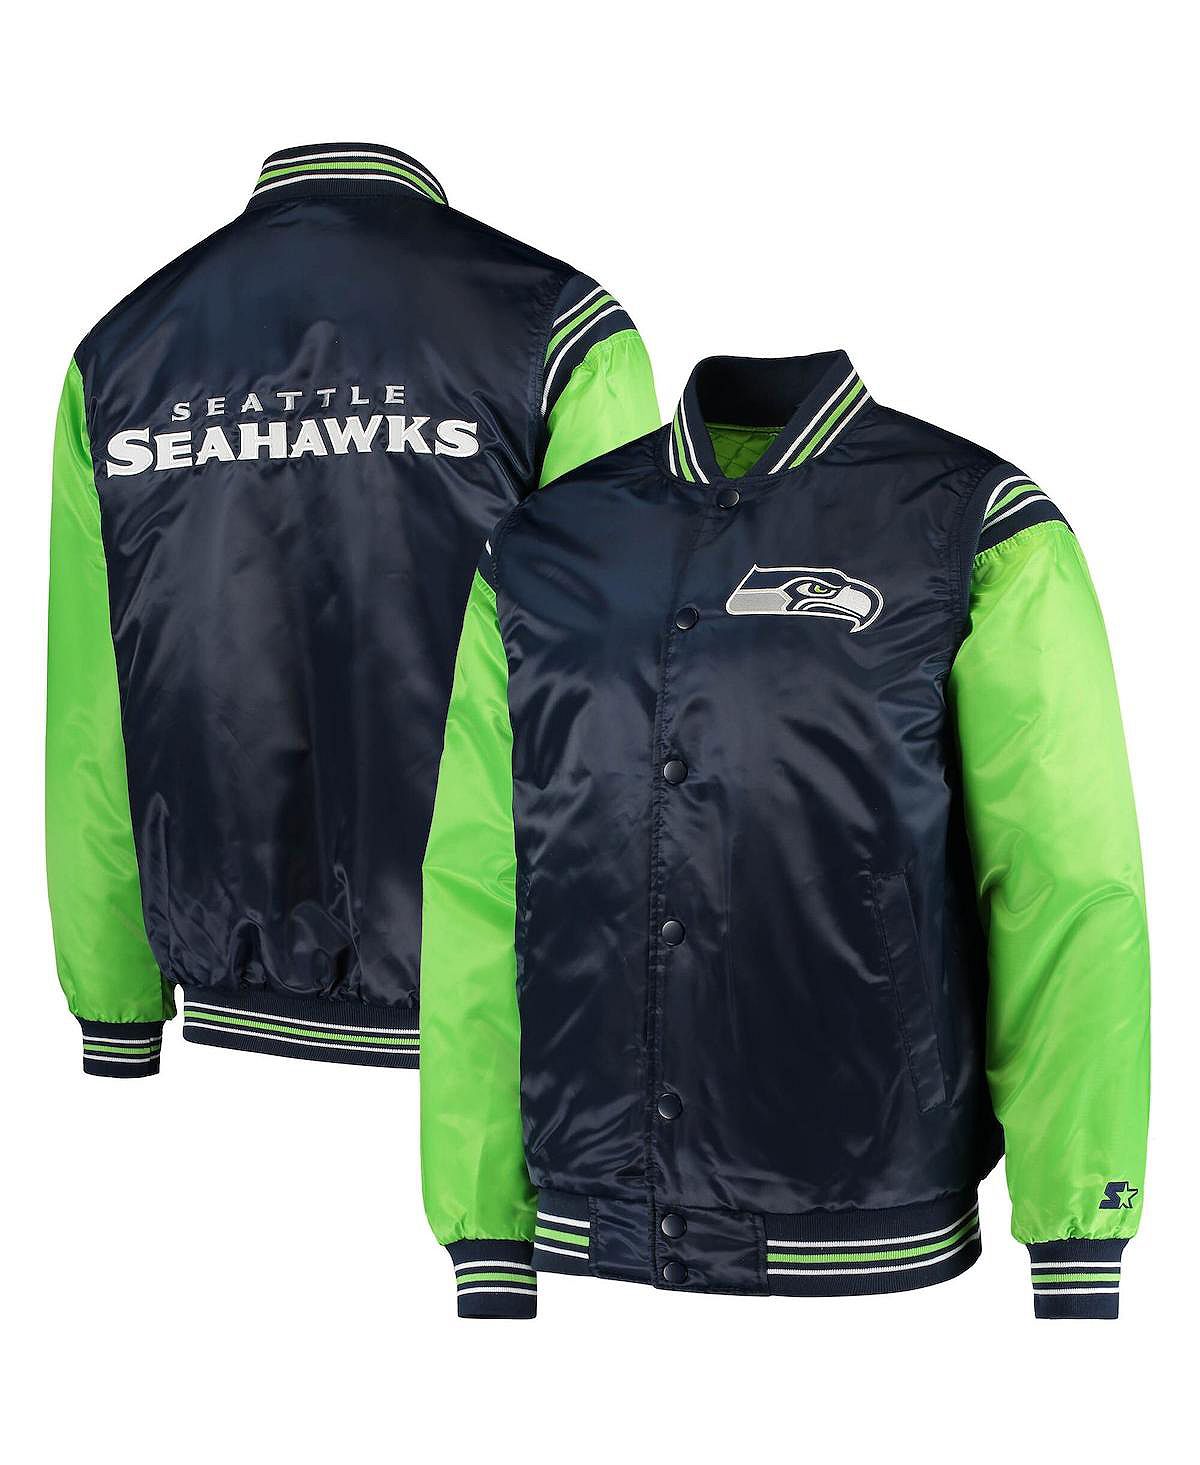 цена Мужская темно-синяя куртка колледжа, неоново-зеленая атласная университетская куртка seattle seahawks enforcer с застежкой на кнопках Starter, мульти